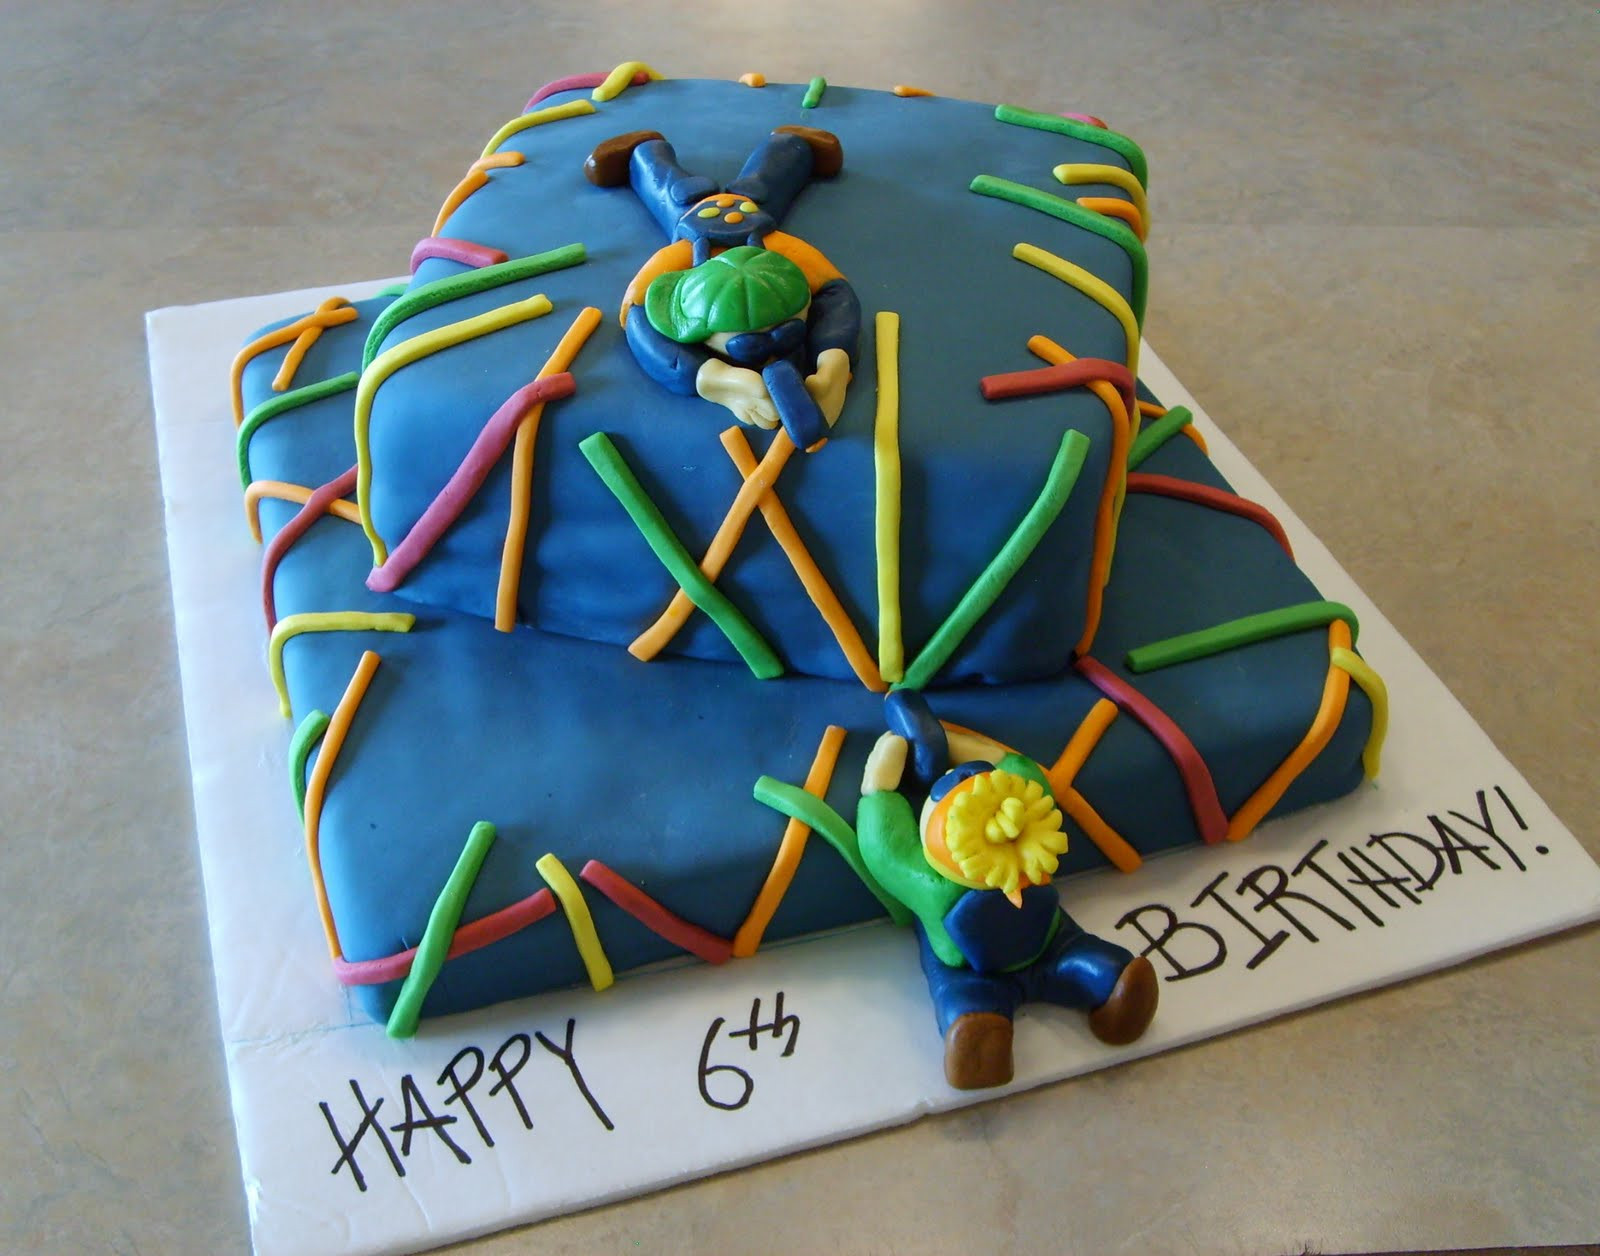 Laser Tag Birthday Cake
 The Open Pantry Laser Tag Birthday Cake